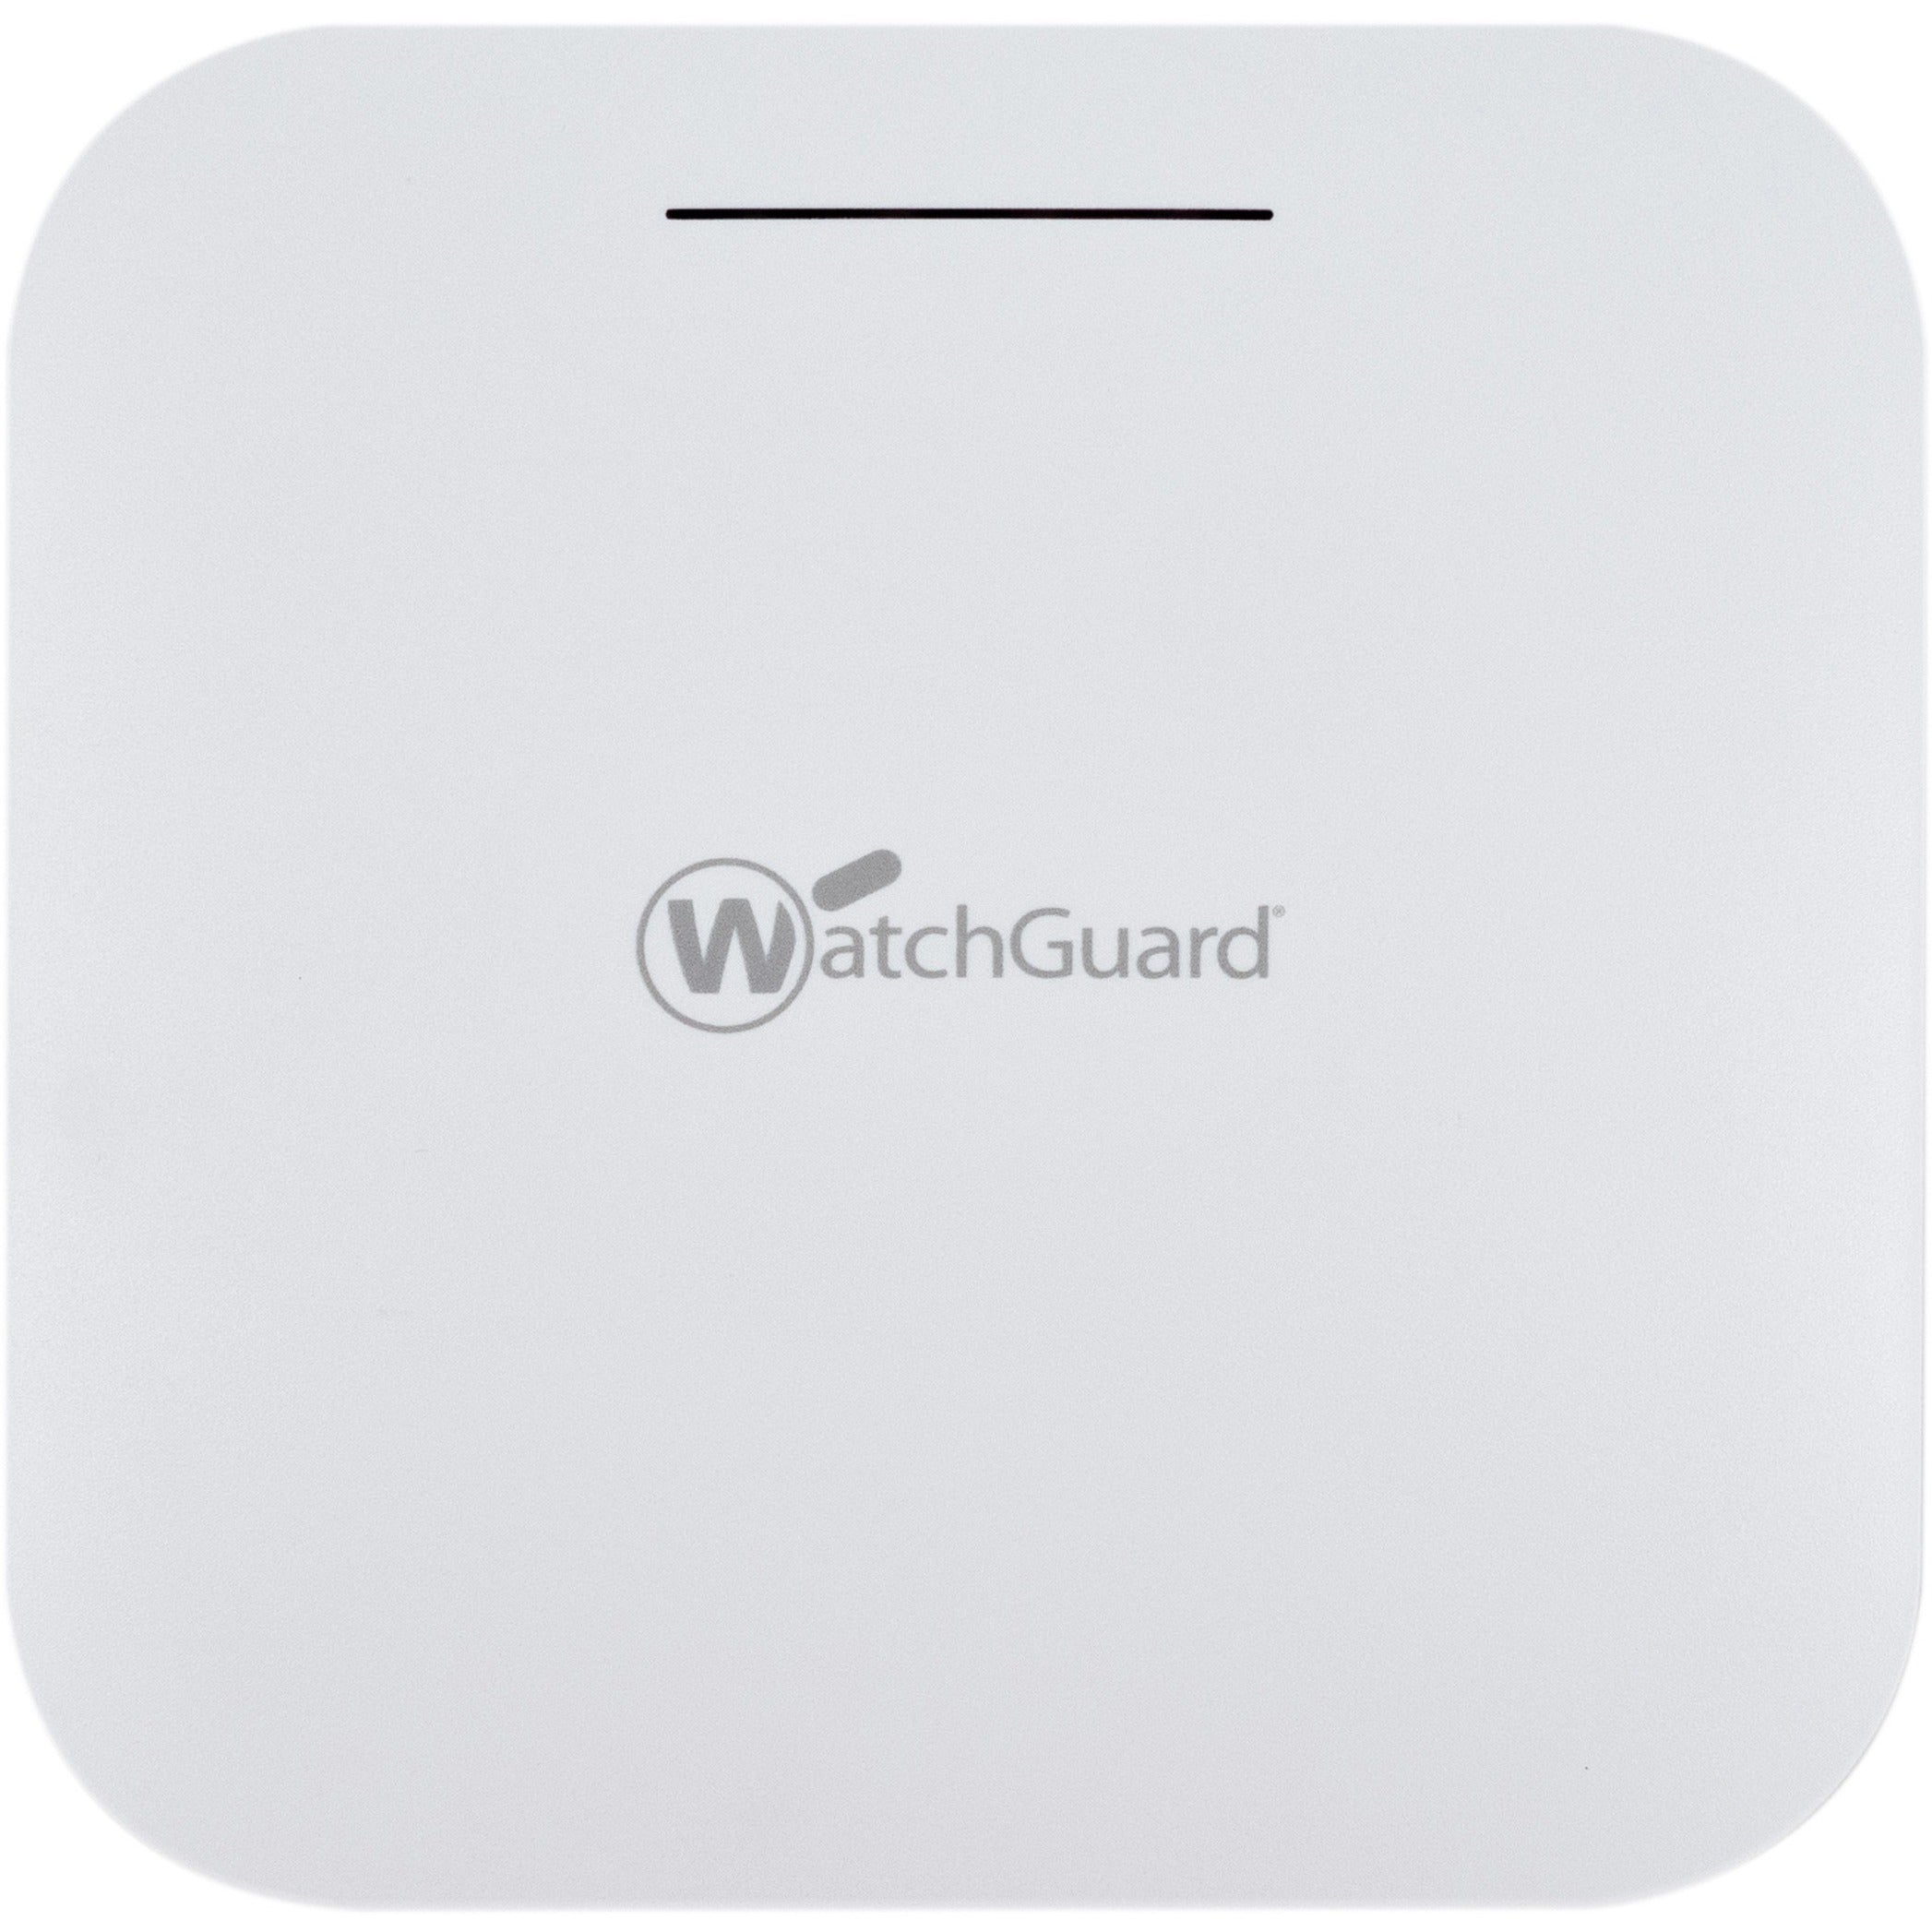 WatchGuard WGA13003300 AP130 Indoor Access Point, Dual Band, 1.73 Gbit/s Wireless Transmission Speed